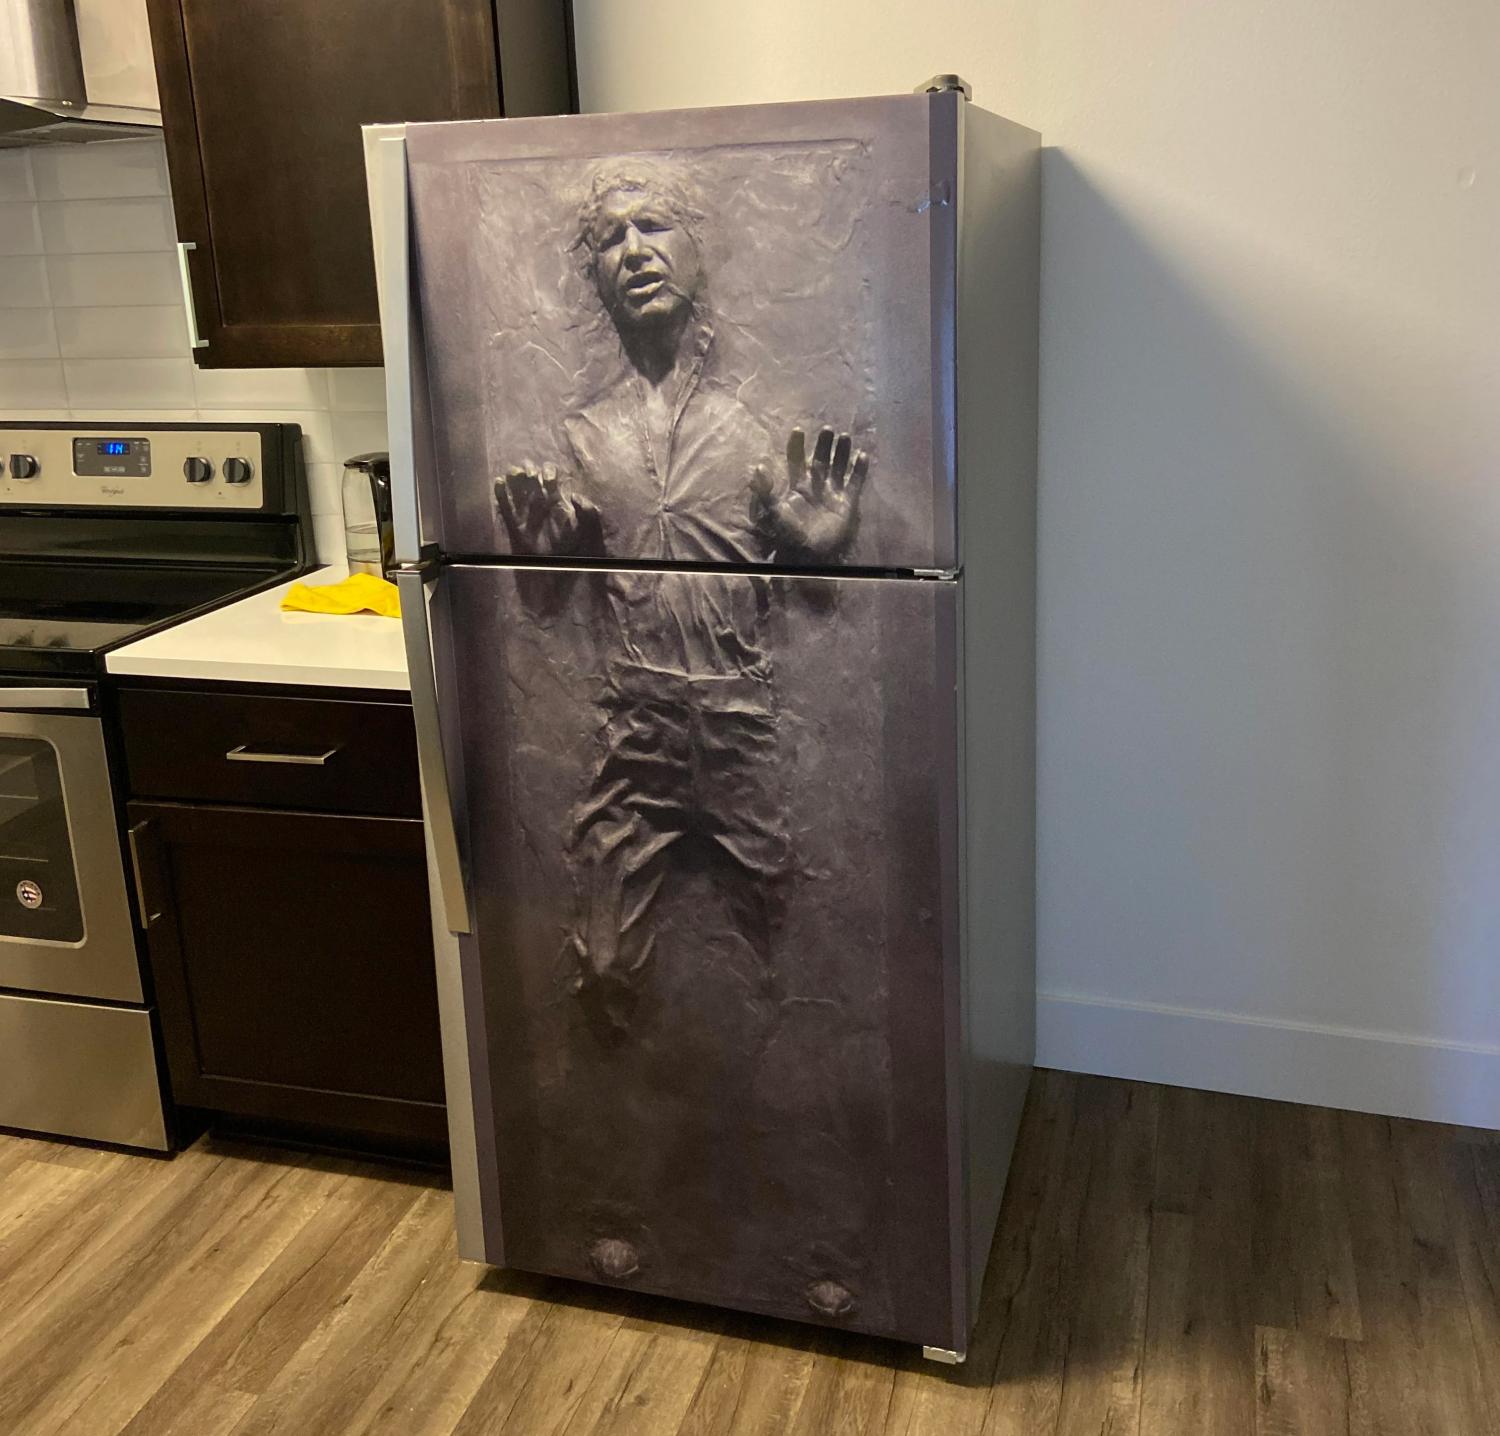 Han Solo Stuck in Carbonite Fridge Wrap - Vinyl refrigerator sticker decal Star Wars Han Solo Frozen In Carbonite